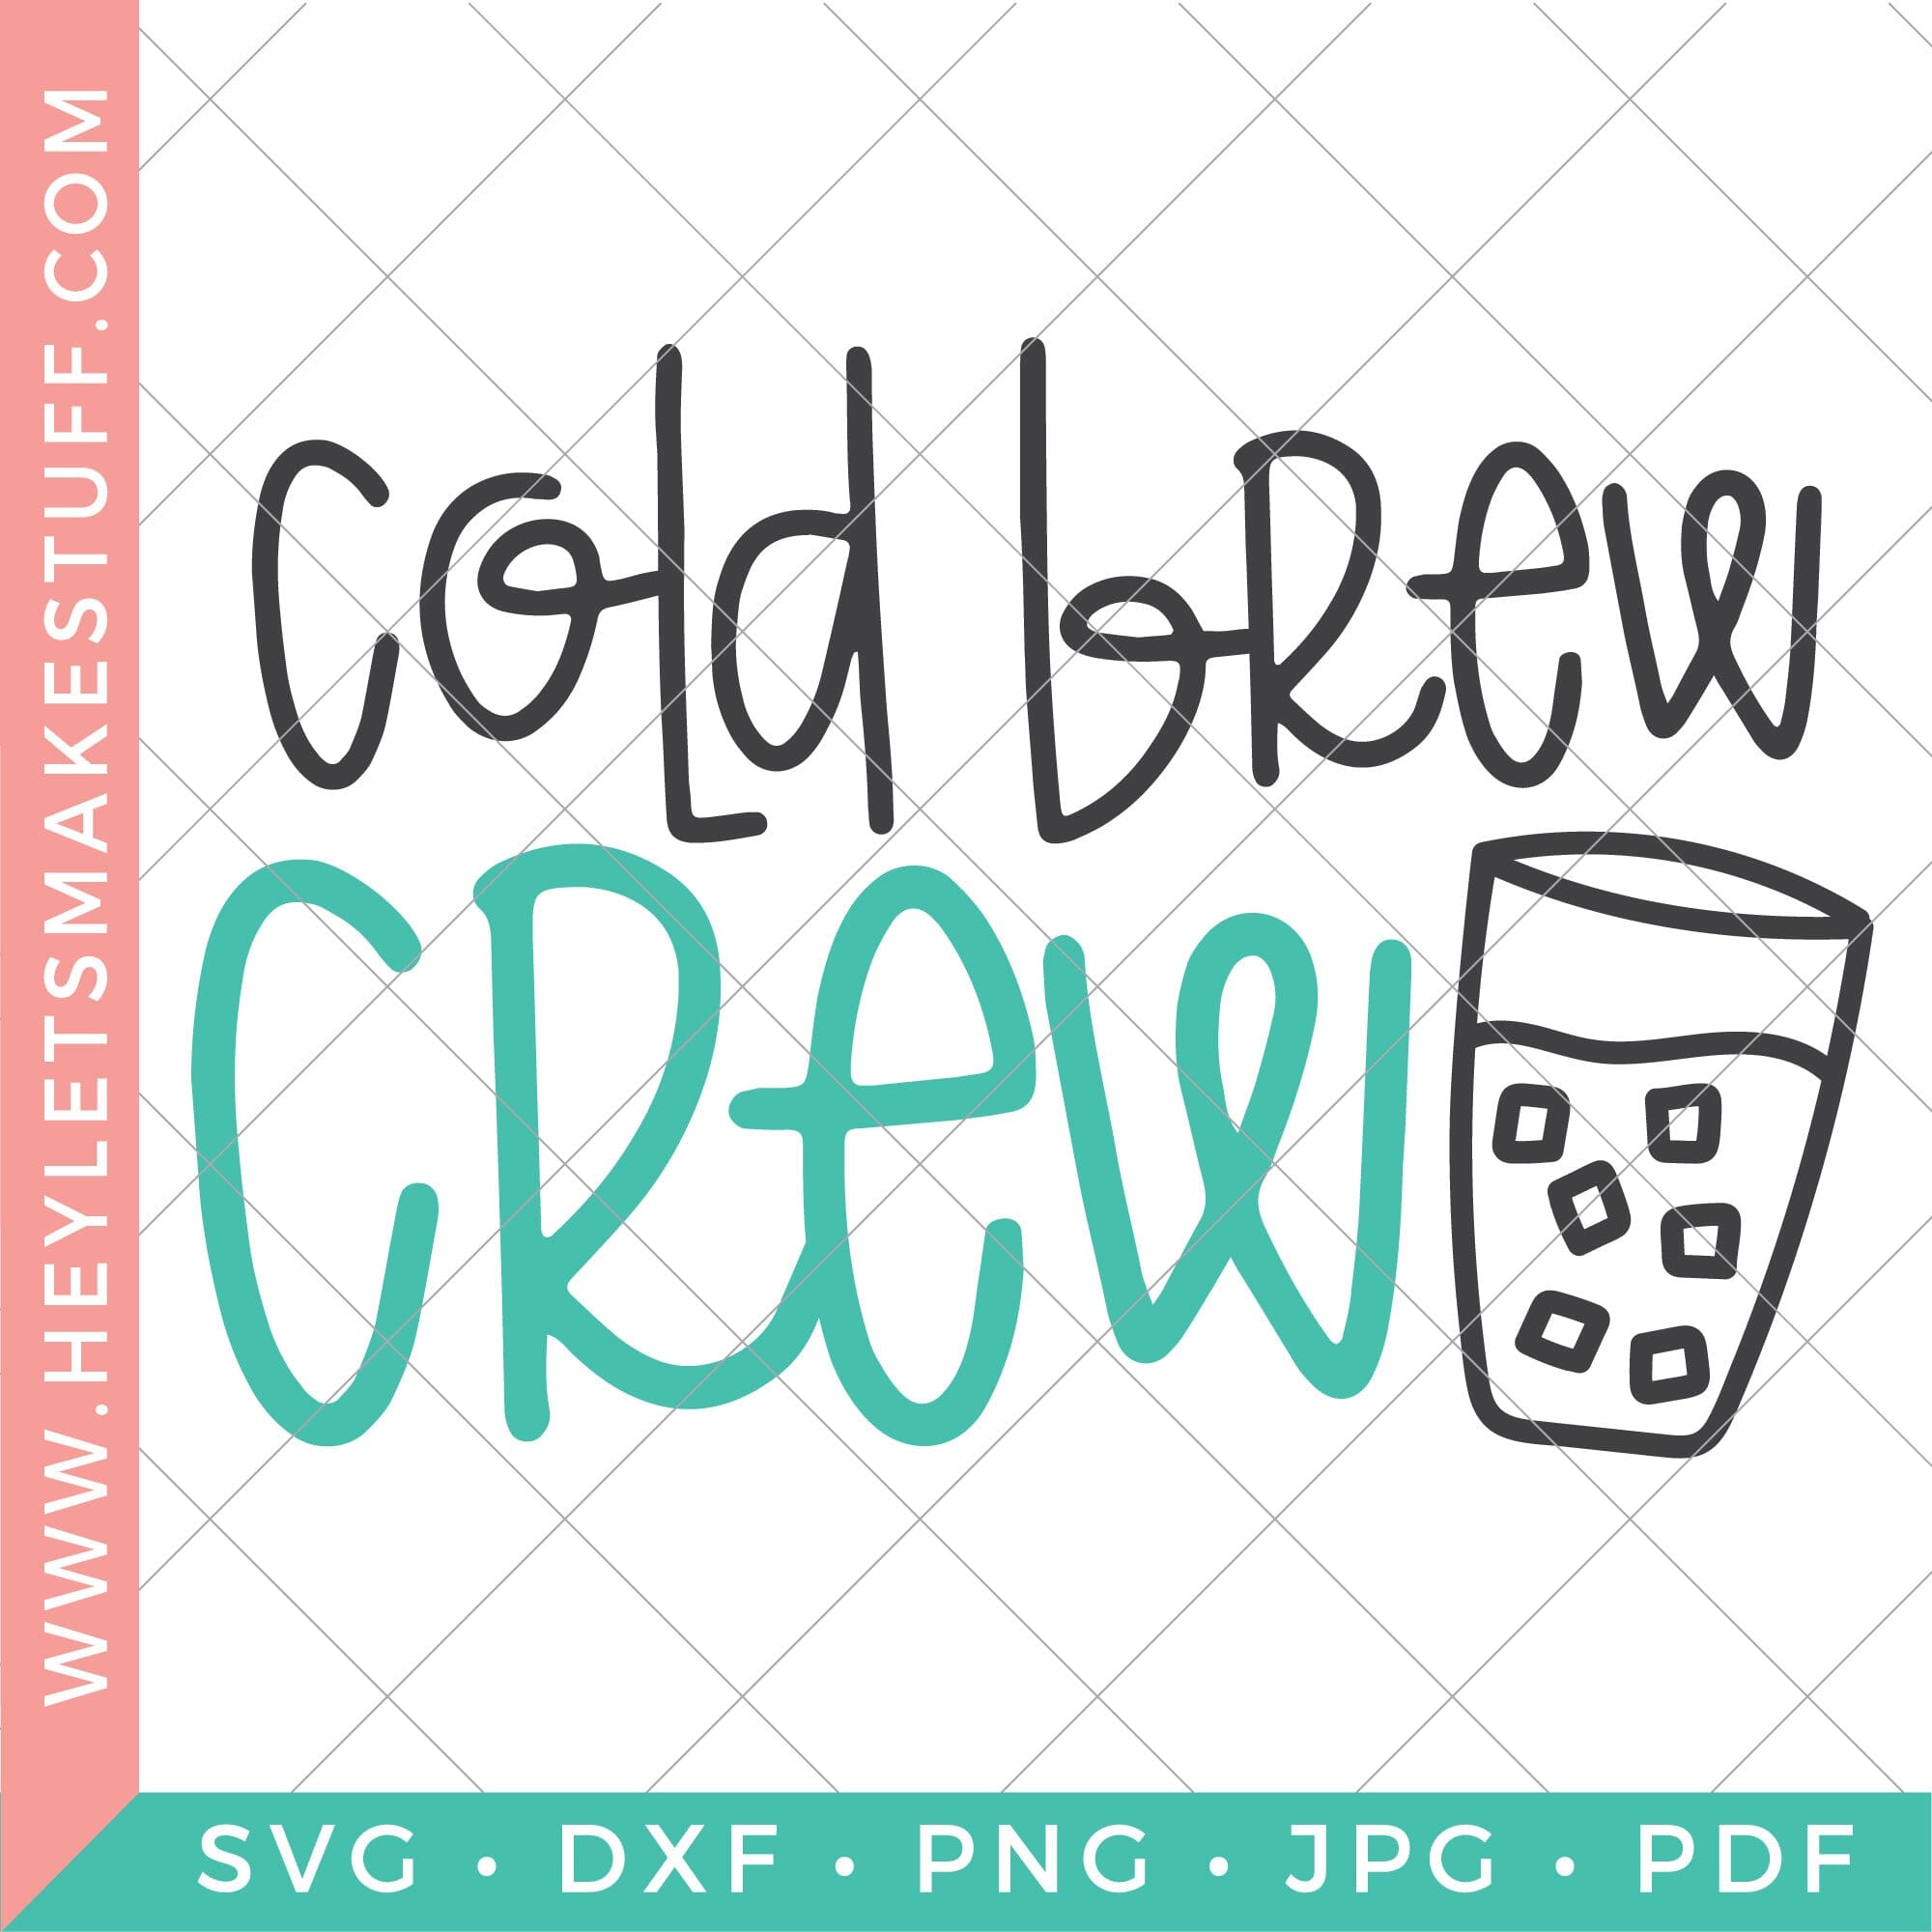 Brew crew SVG - So Fontsy